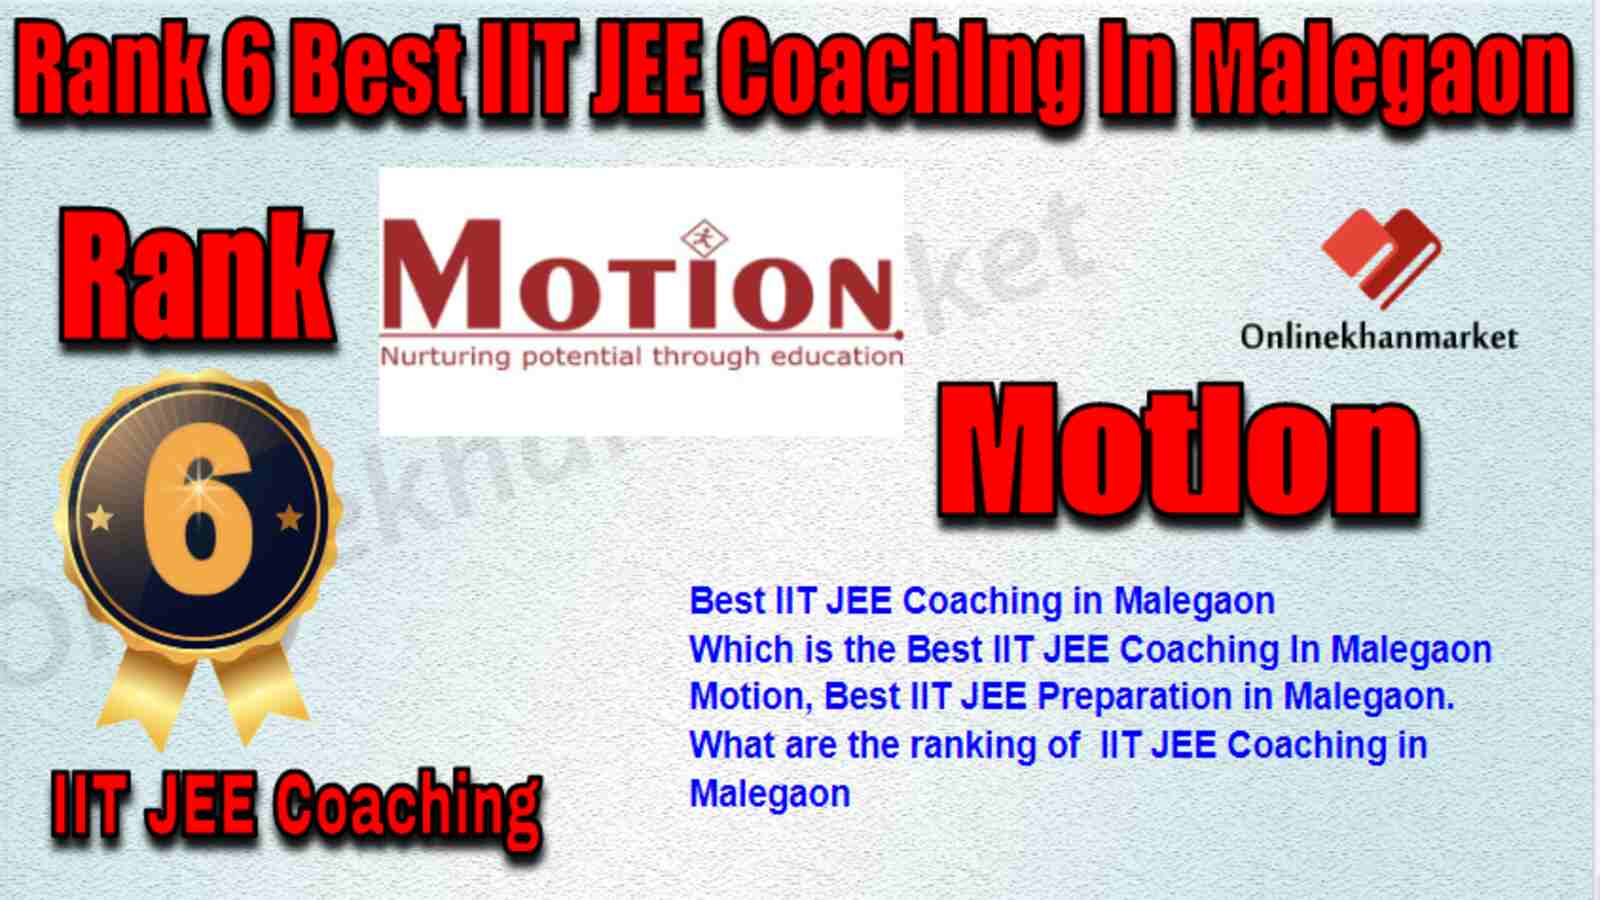 Rank 6 Best IIT JEE Coaching in Malegaon